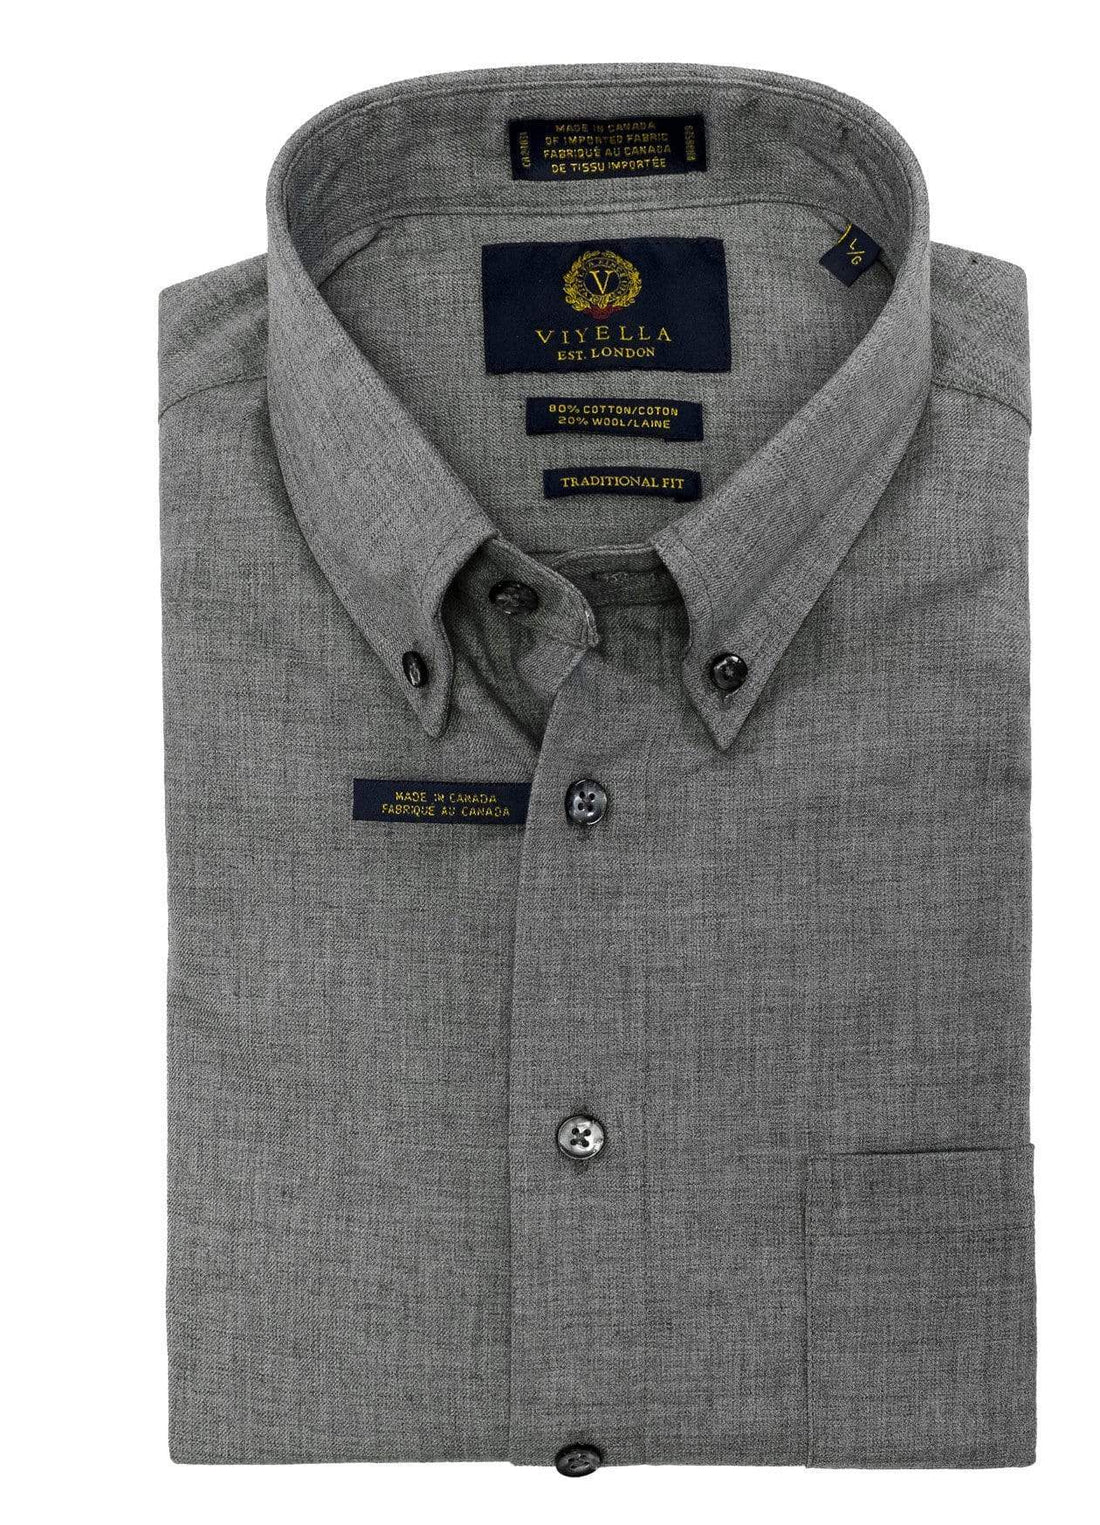 Wool and Cotton Flannel Sport Shirt: Men's Viyella Shirt Royal